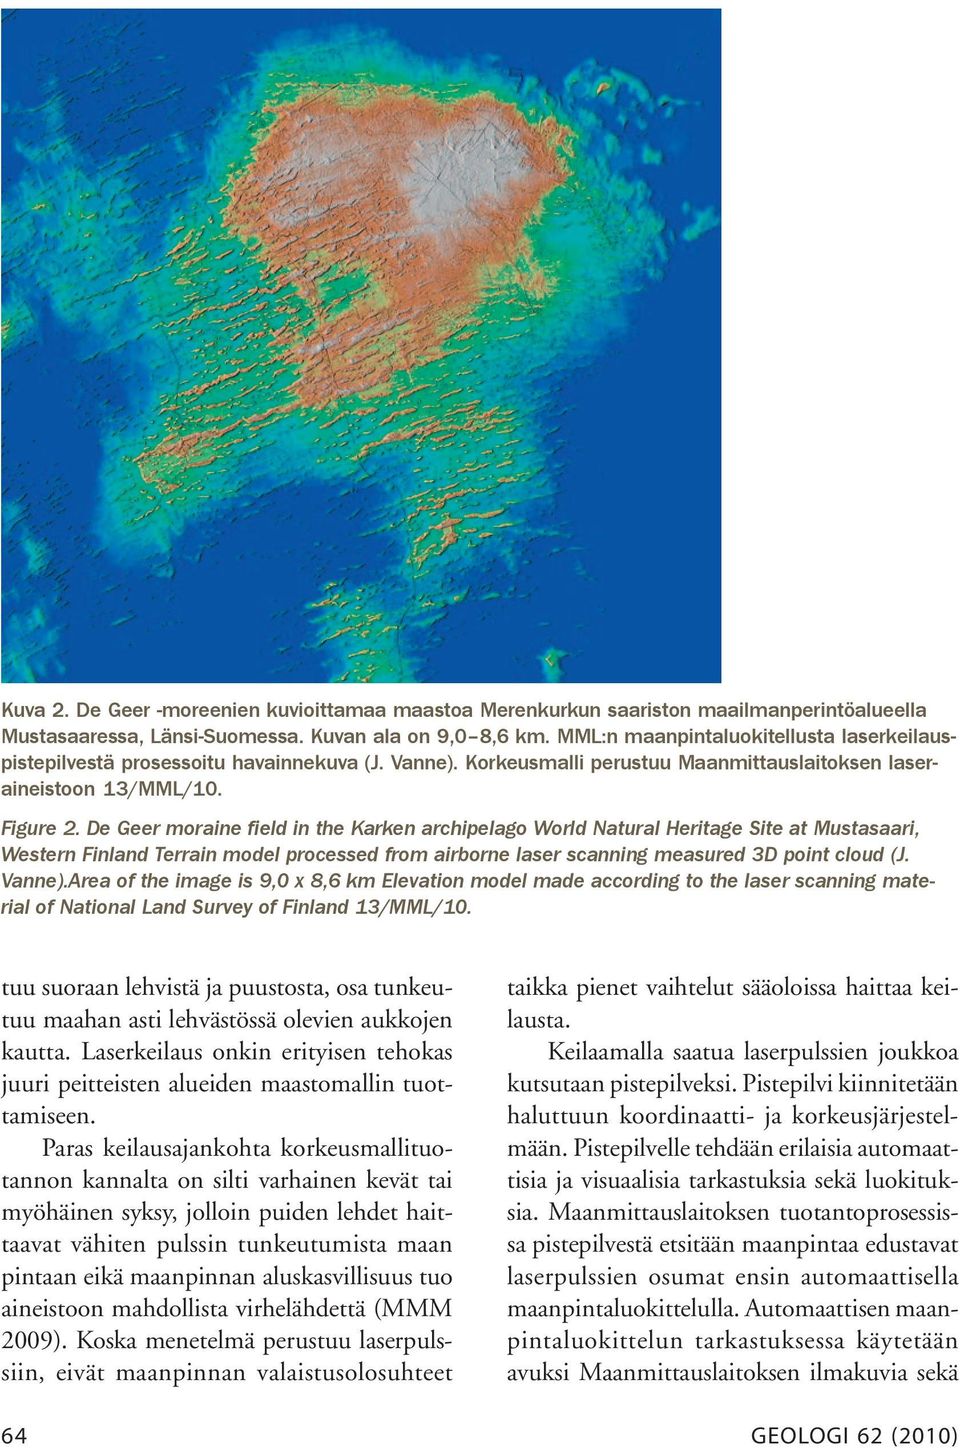 De Geer moraine field in the Karken archipelago World Natural Heritage Site at Mustasaari, Western Finland Terrain model processed from airborne laser scanning measured 3D point cloud (J. Vanne).